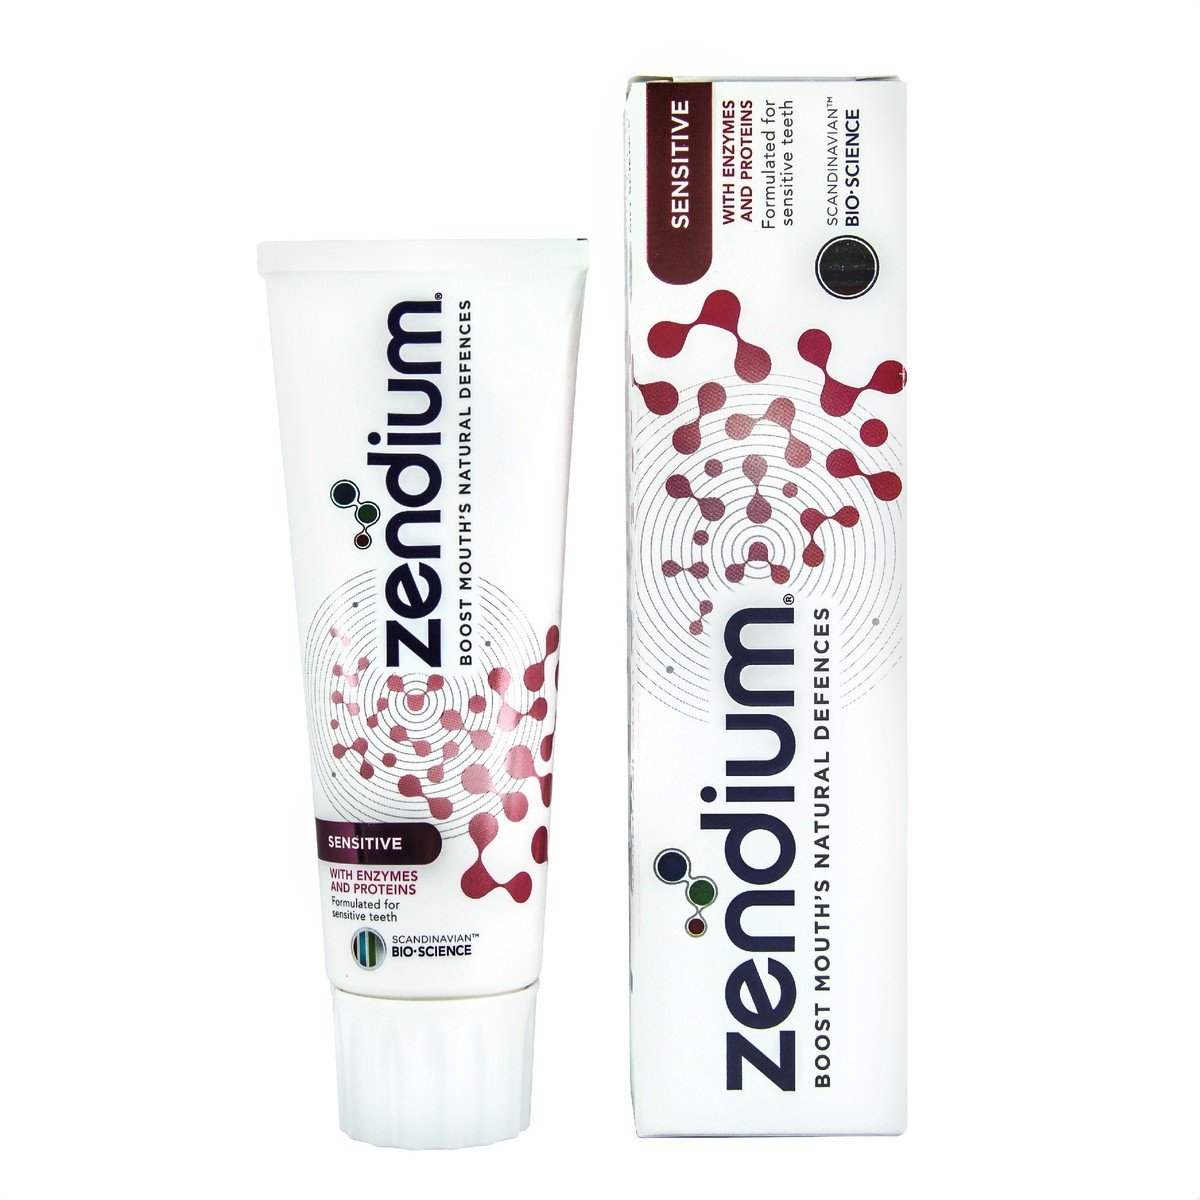 Zendium Toothpaste Sensitive 75 ml